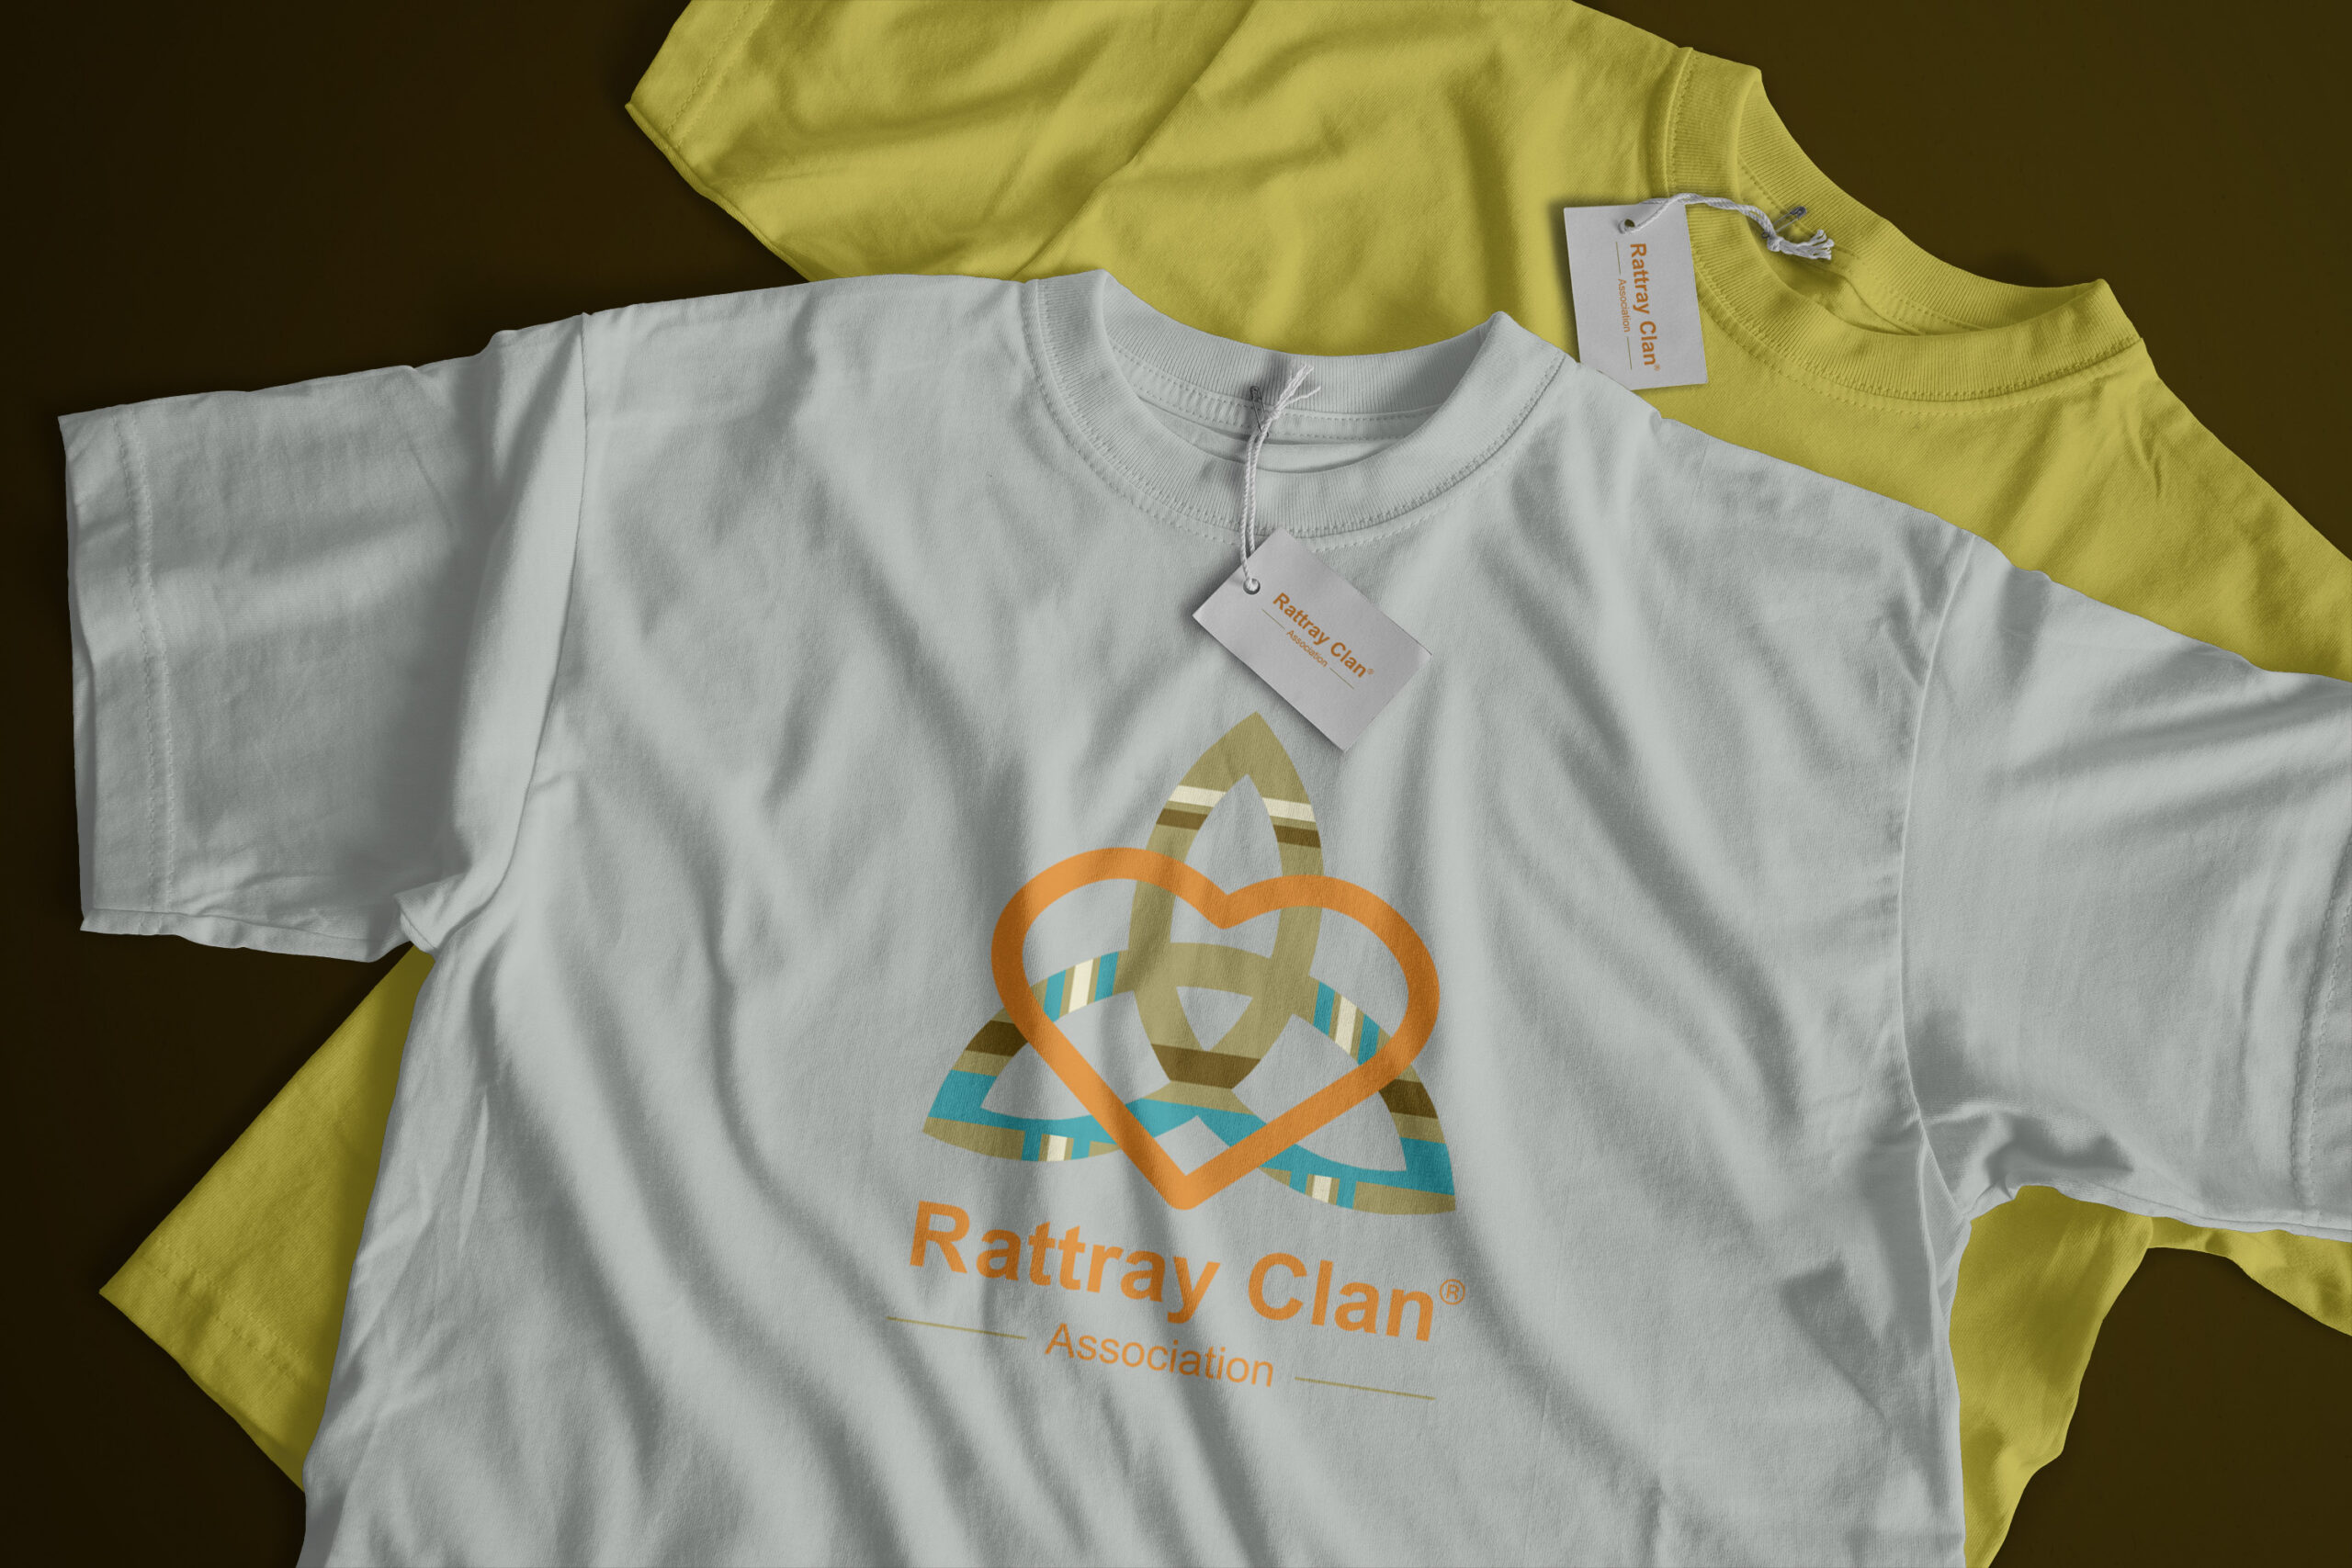 Rattray Clan t-shirt mockup